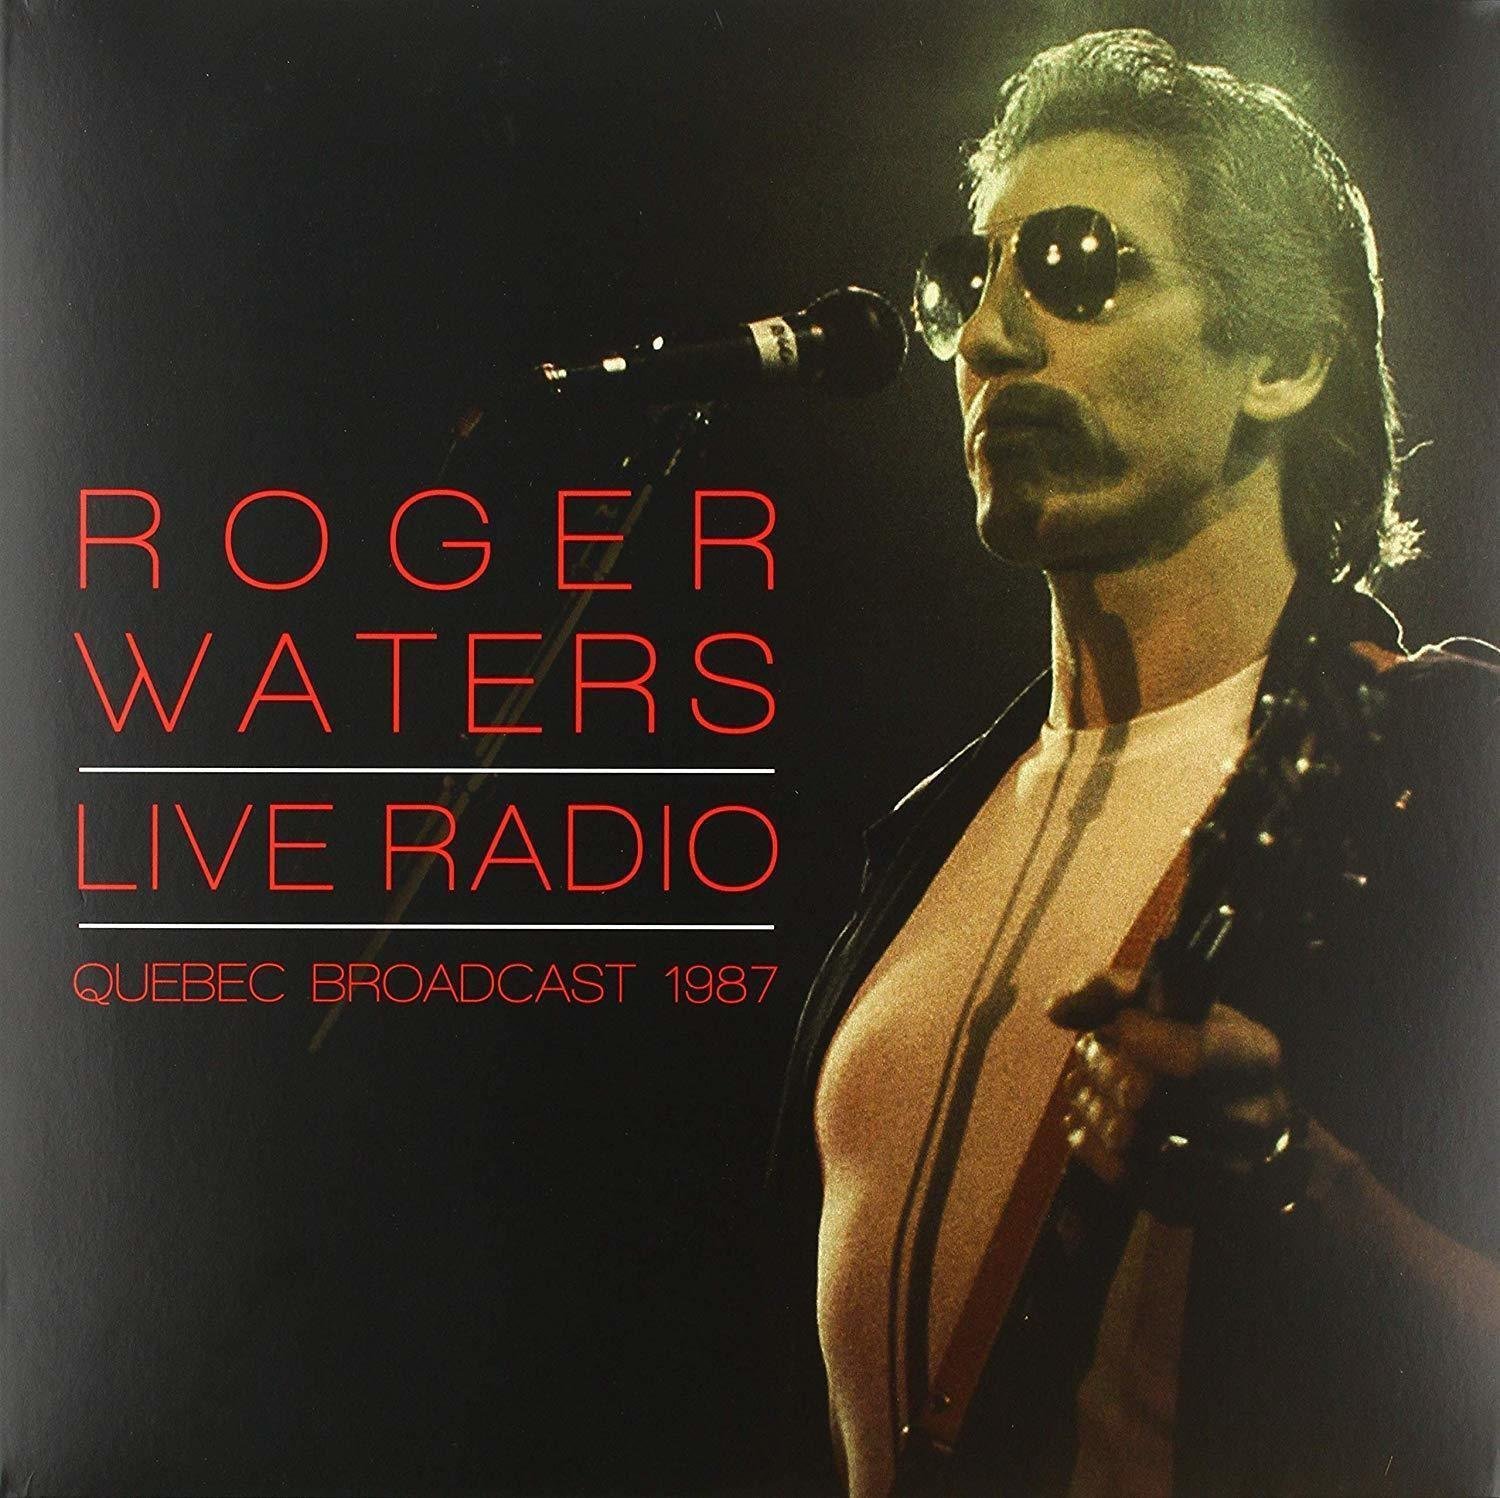 LP deska Roger Waters - Live Radio - Quebec Broadcast 1987 (2 LP)